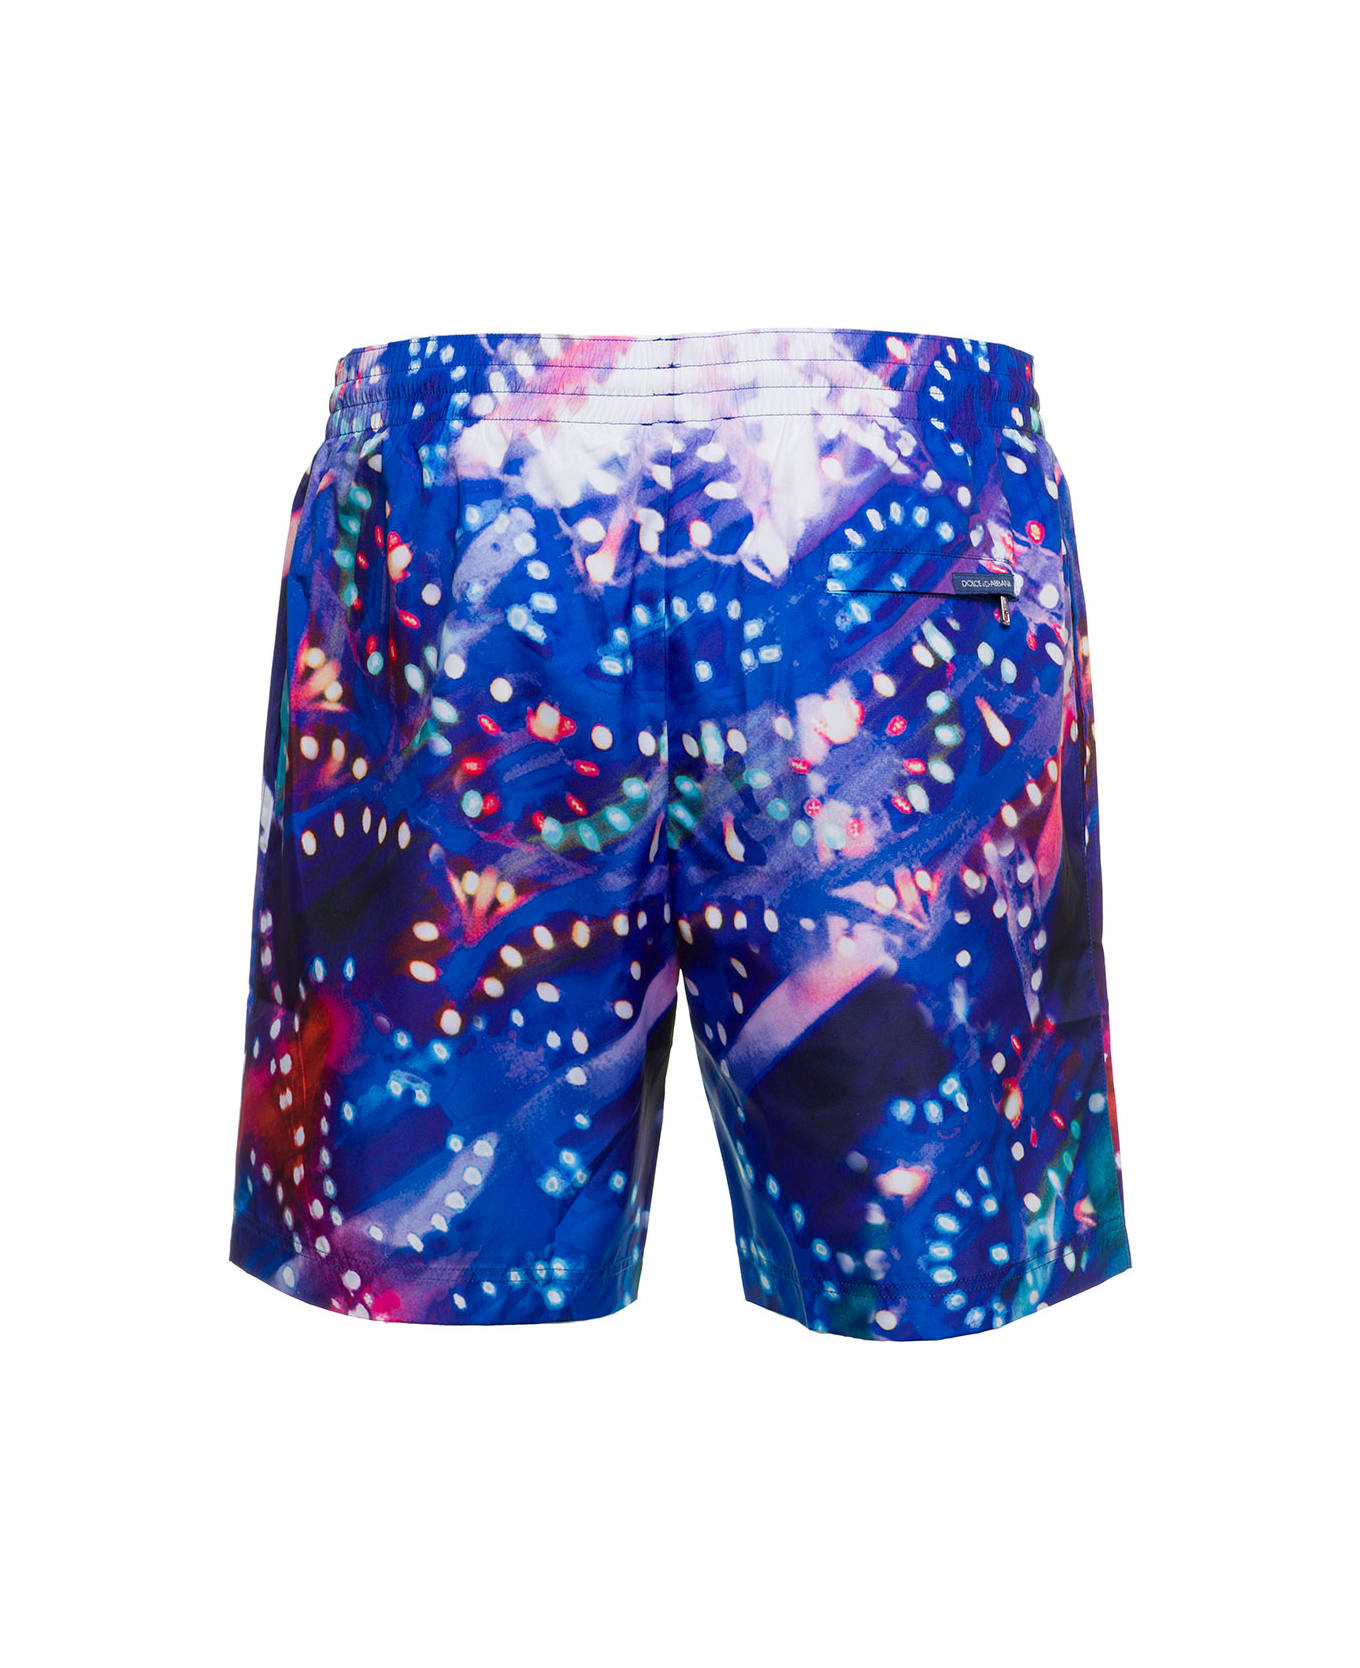 Dolce & Gabbana Man's Nylon Luminarie Printed Swim Shorts - MULTICOLOR スイムトランクス